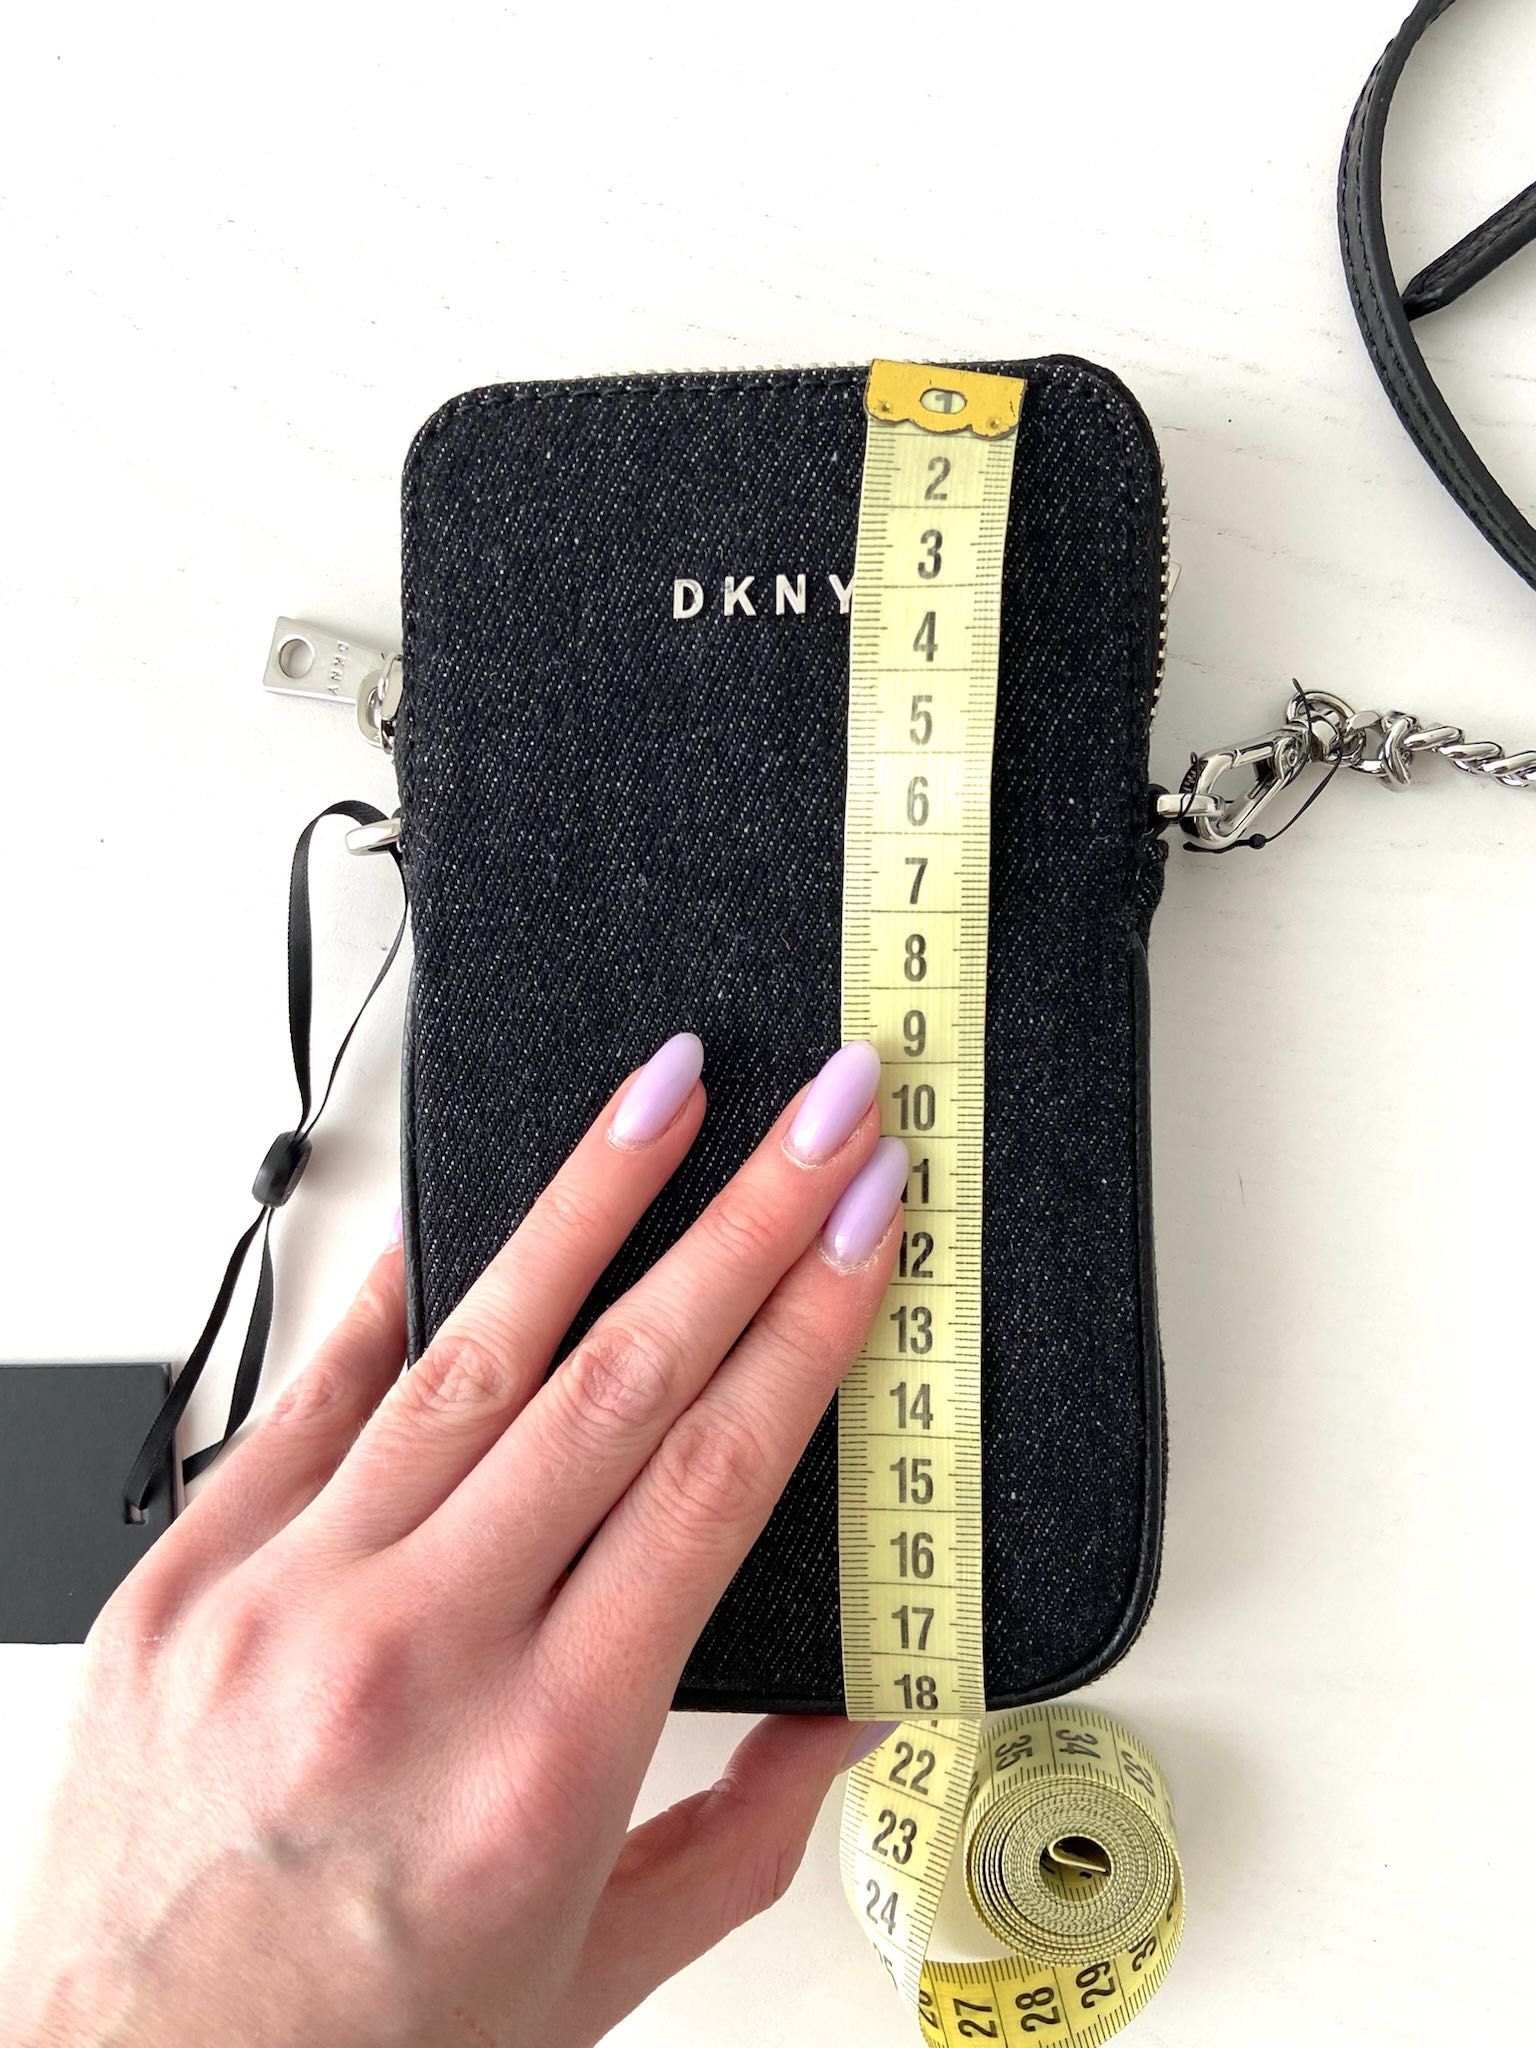 Жіноча сумочка під телефон чохол женская сумка DKNY дкну iphone